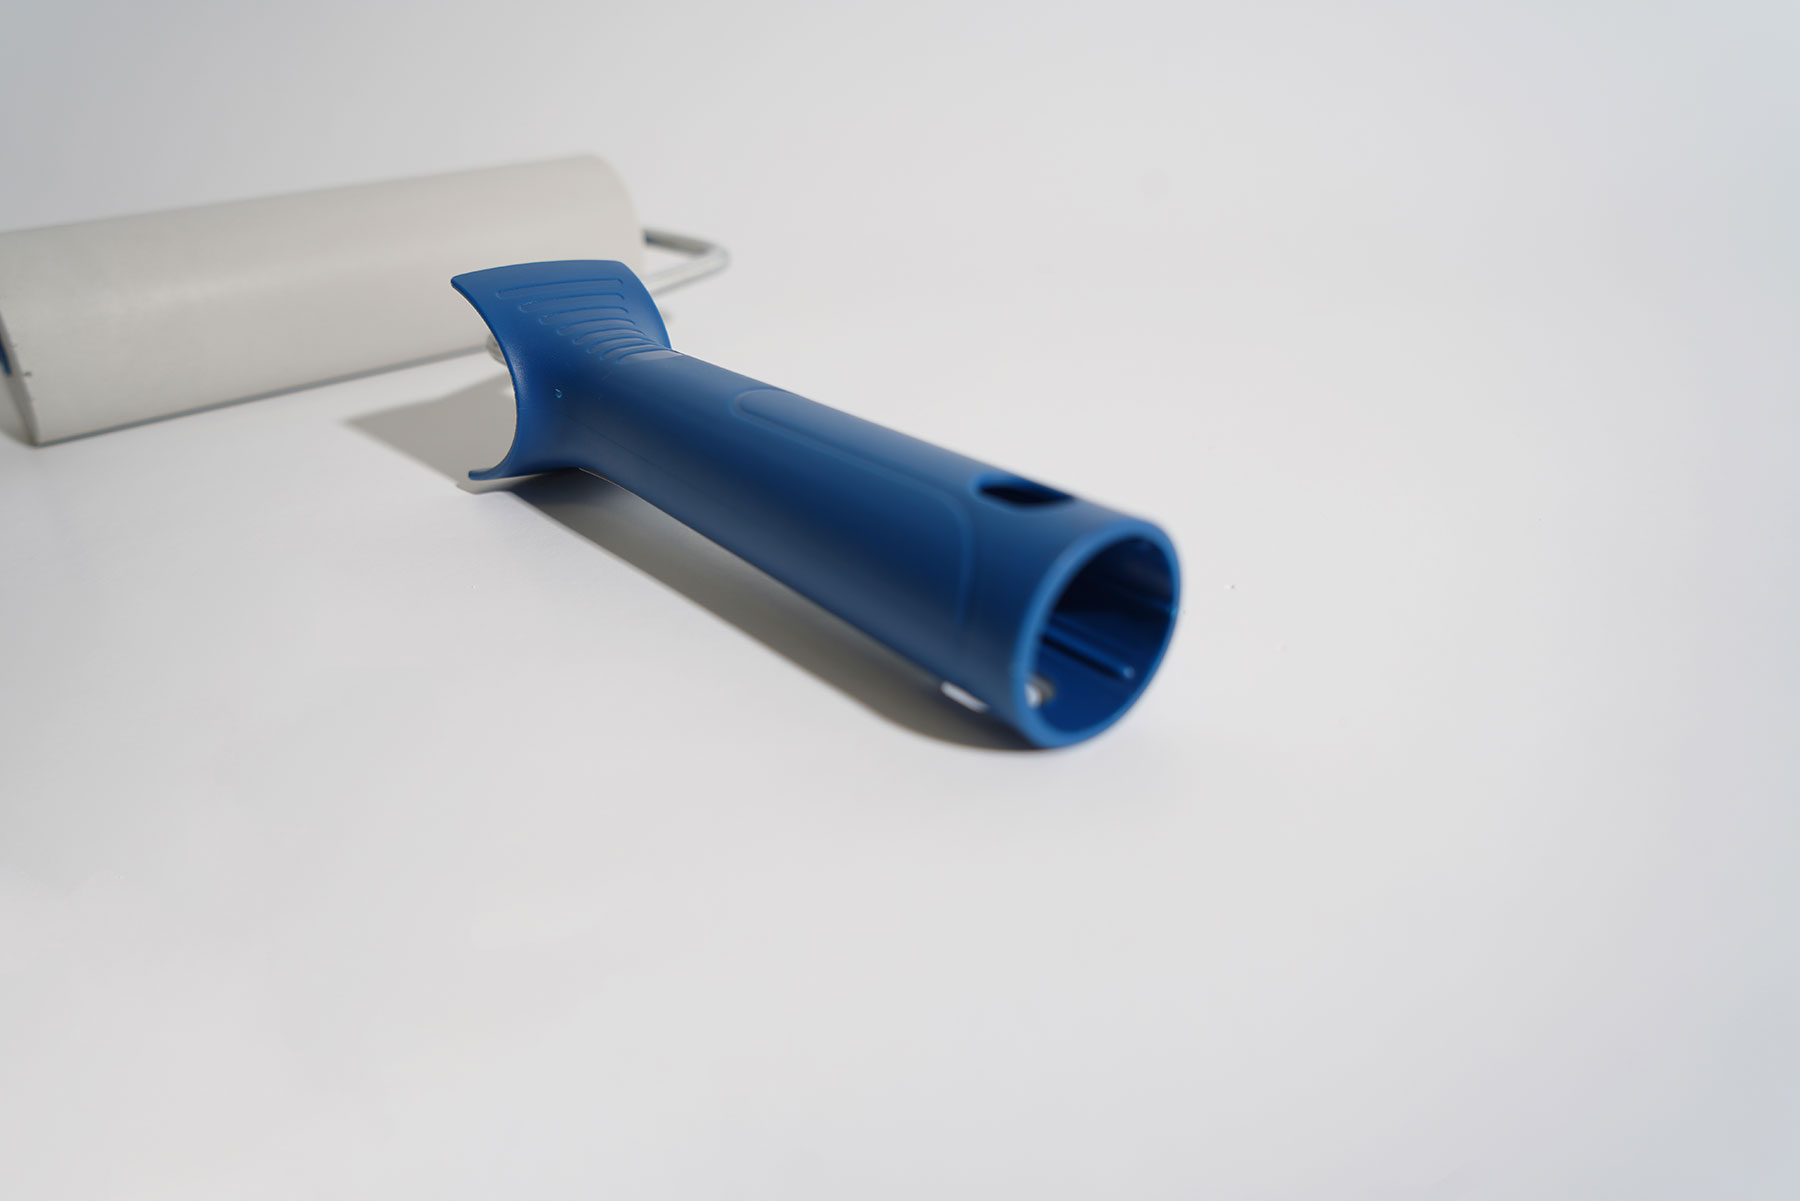             Pressure roller with 15cm PU foam roller & plastic handle
        